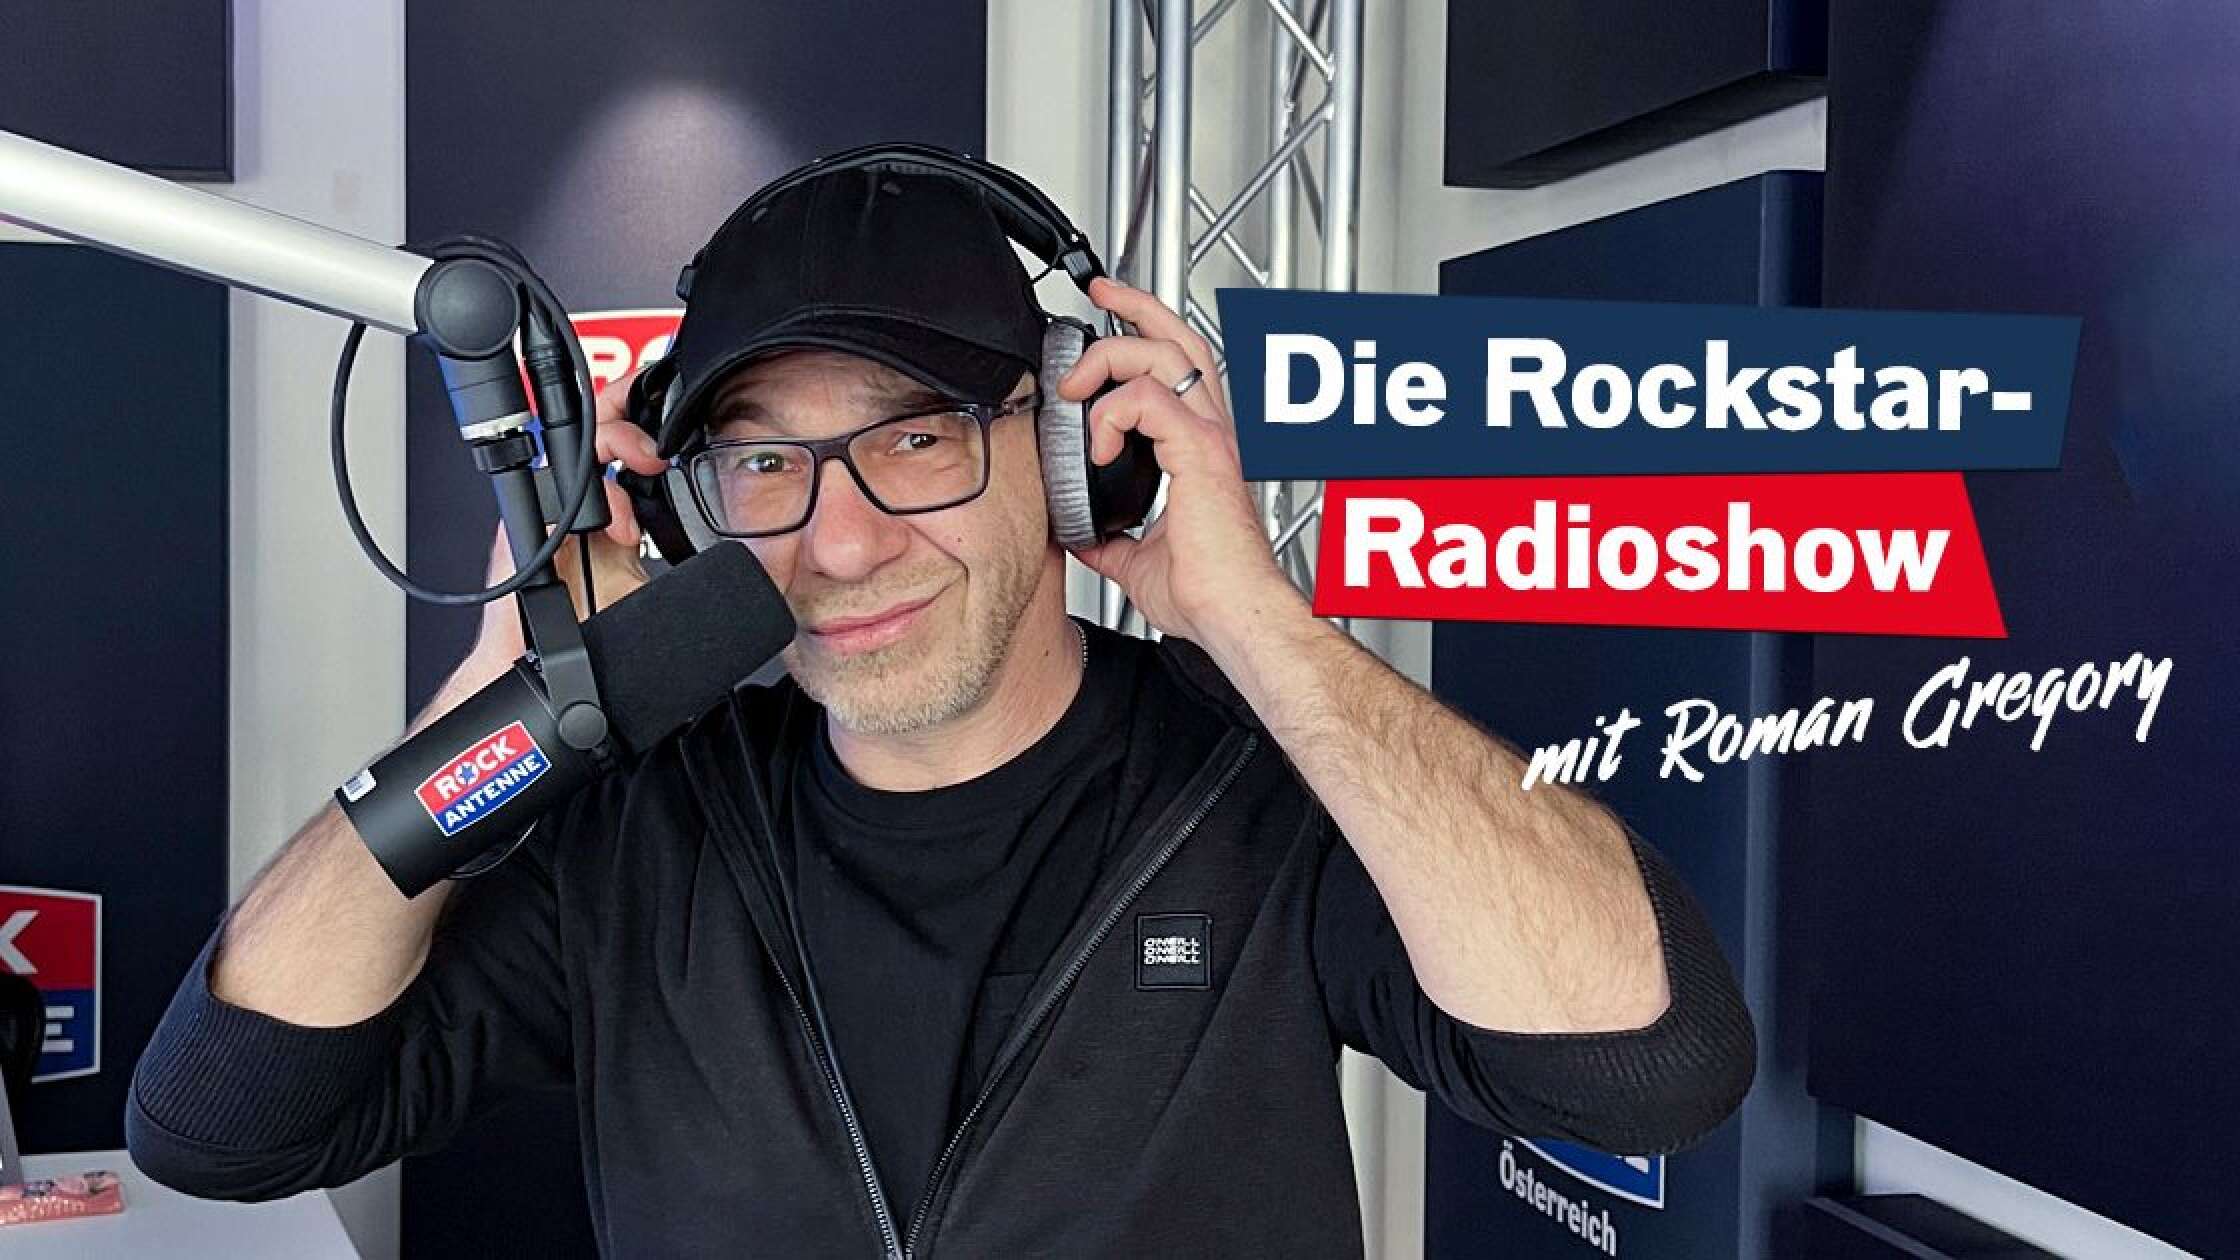 Rockstar Radioshow mit Roman Gregory